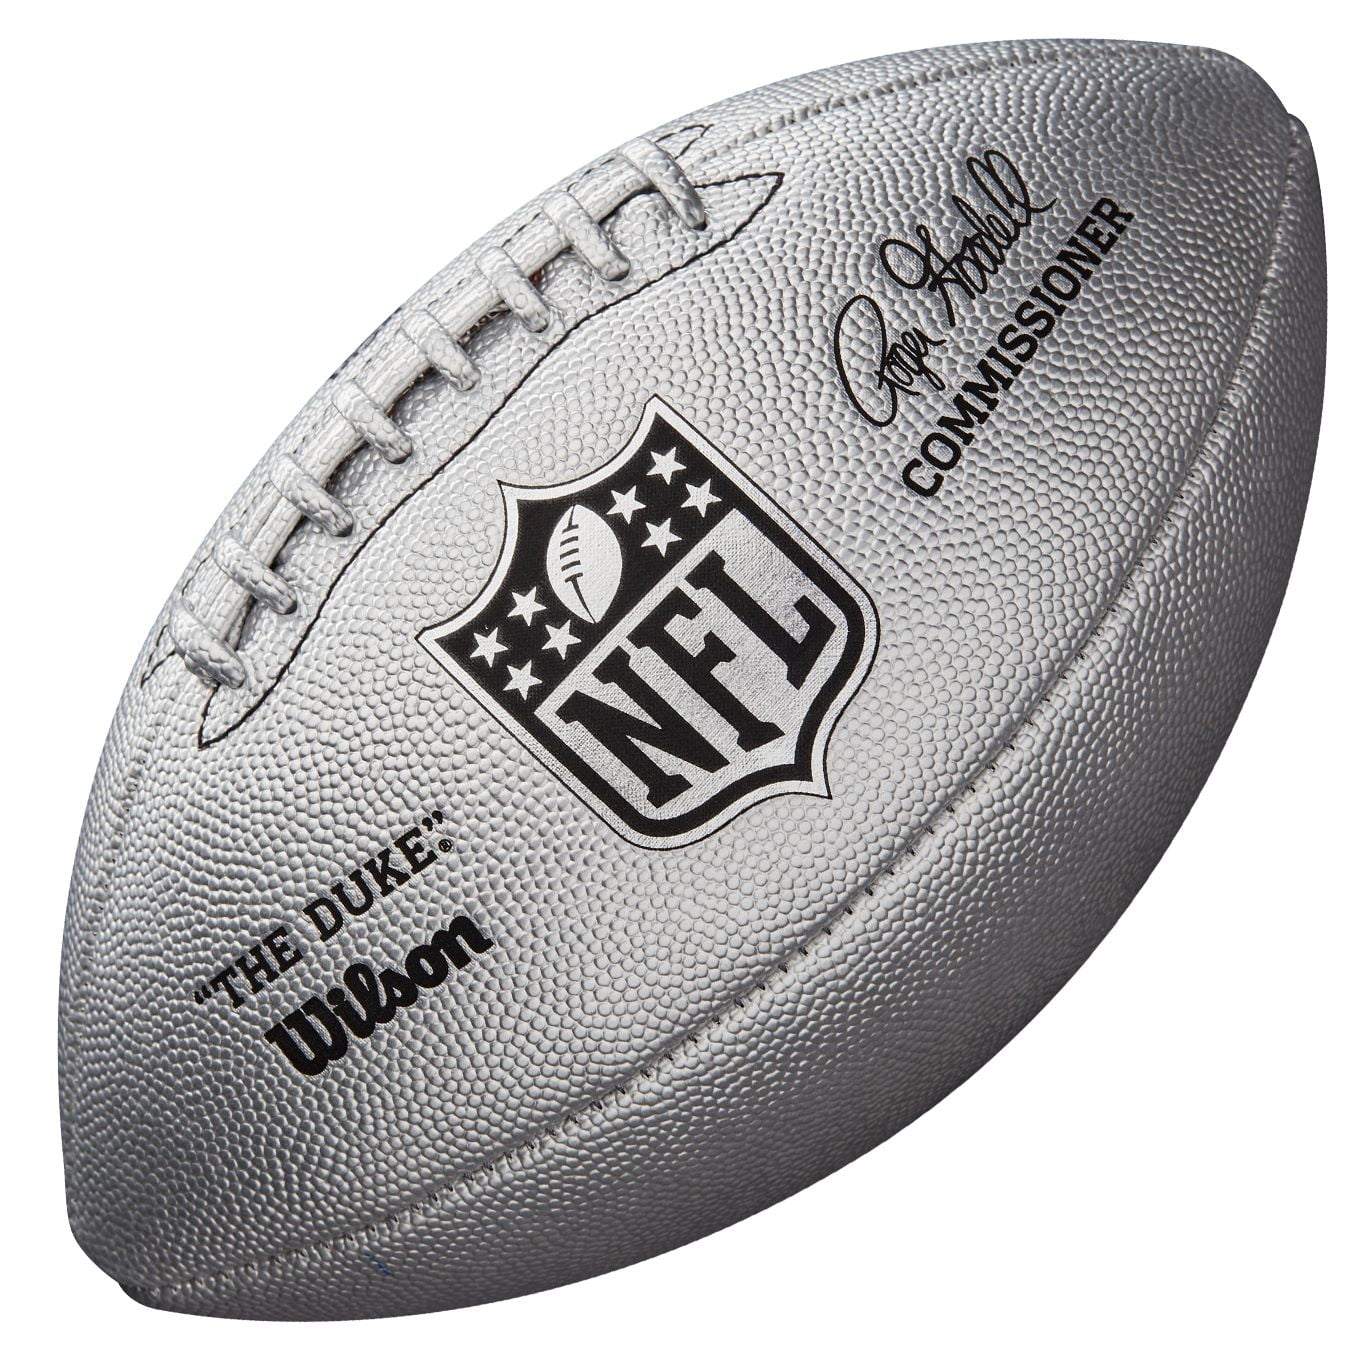 Wilson NFL Replica Metallic Football -